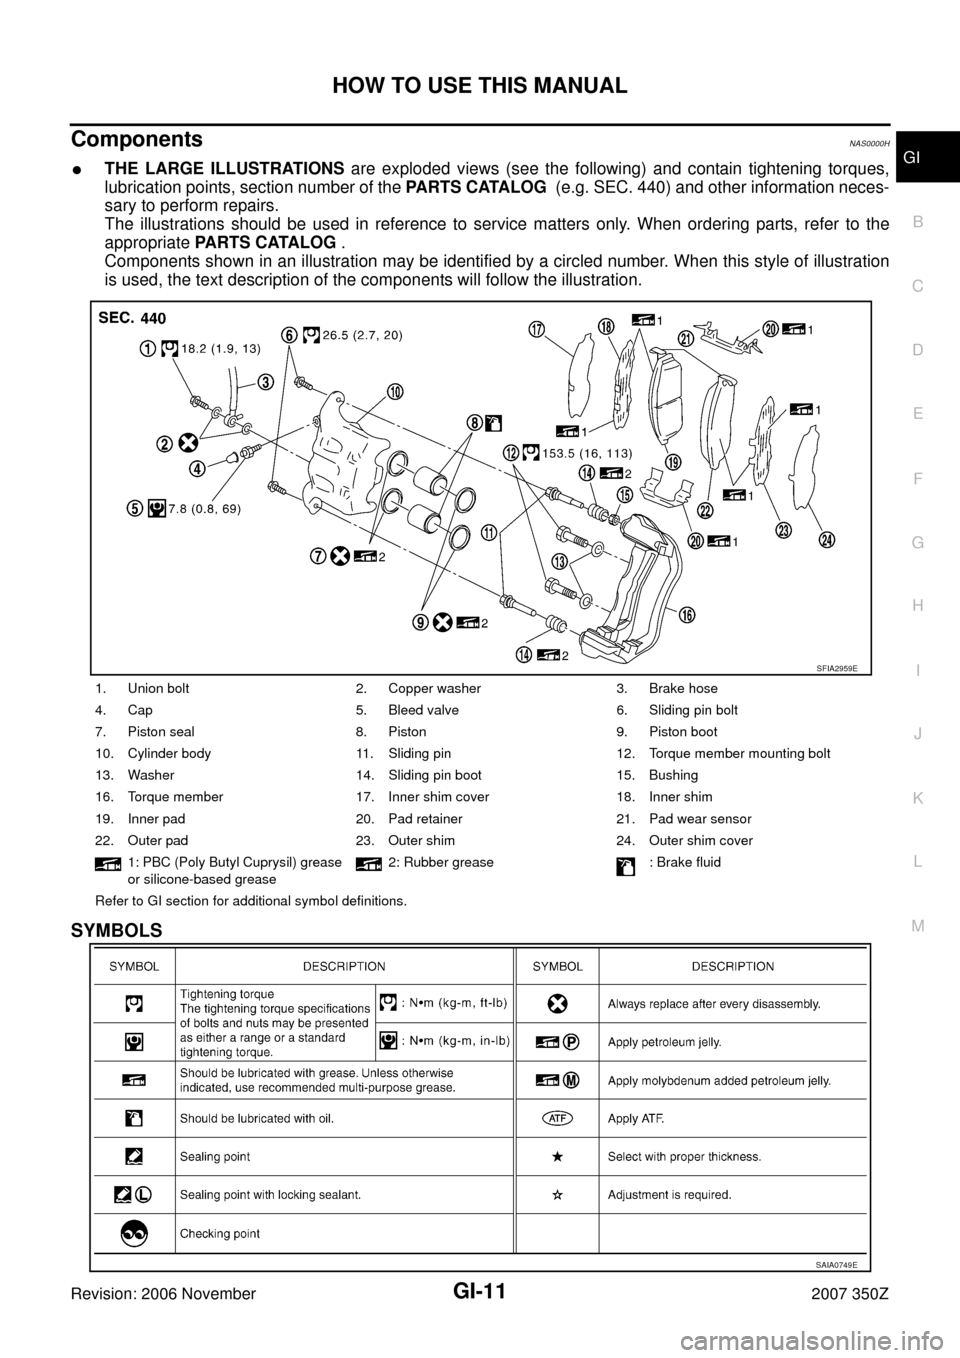 NISSAN 350Z 2007 Z33 General Information User Guide HOW TO USE THIS MANUAL
GI-11
C
D
E
F
G
H
I
J
K
L
MB
GI
Revision: 2006 November2007 350Z
ComponentsNAS0000H
THE LARGE ILLUSTRATIONS are exploded views (see the following) and contain tightening torque